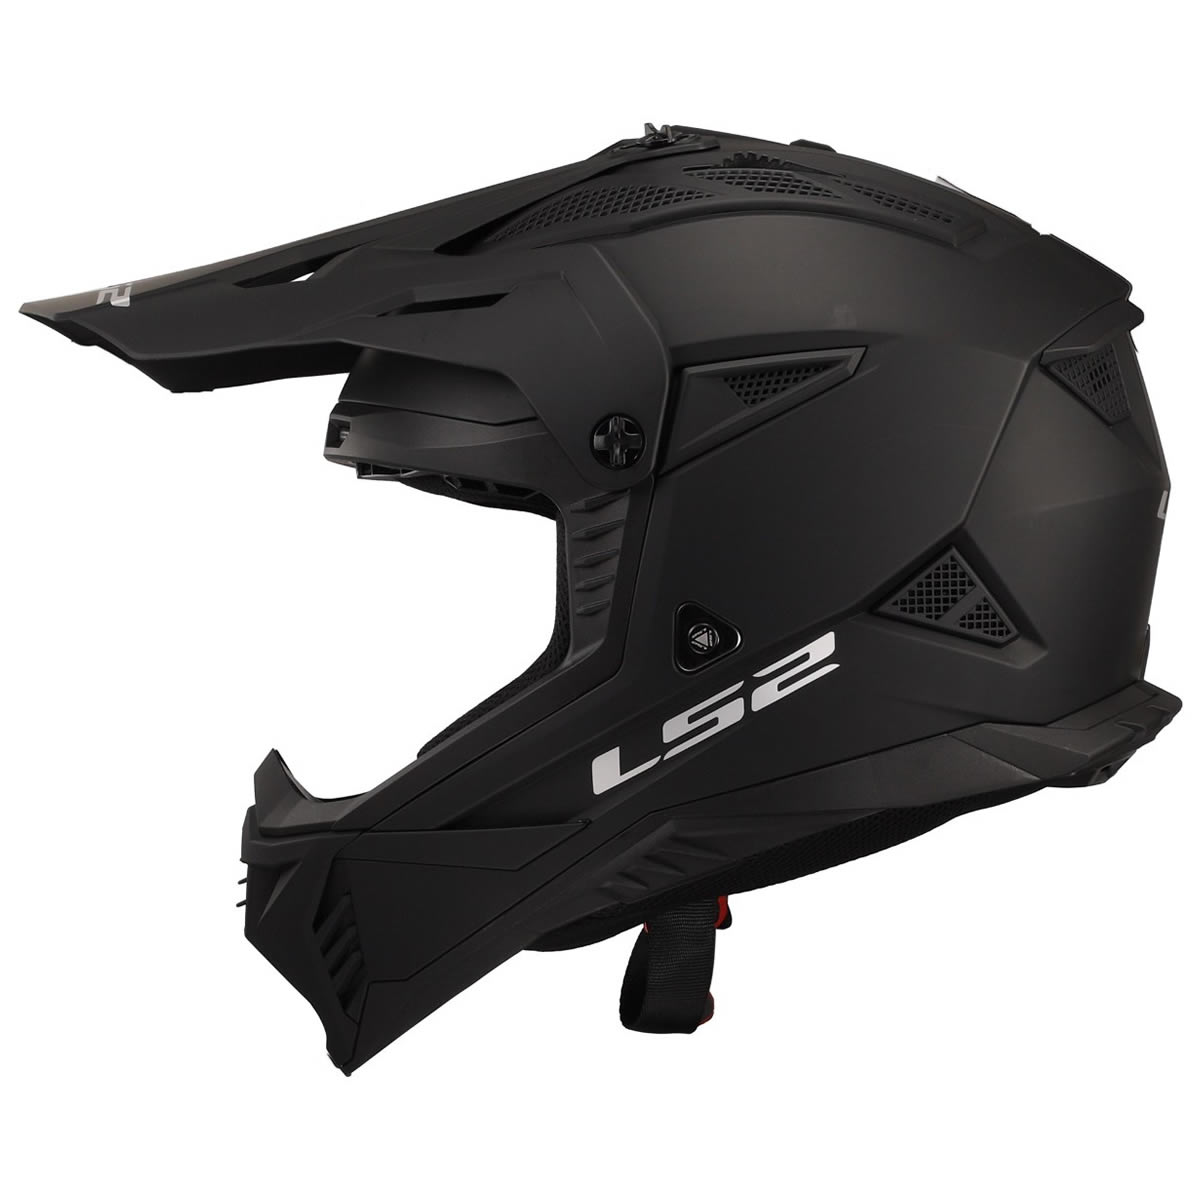 LS2 Fast II MX708 Helm, schwarz matt